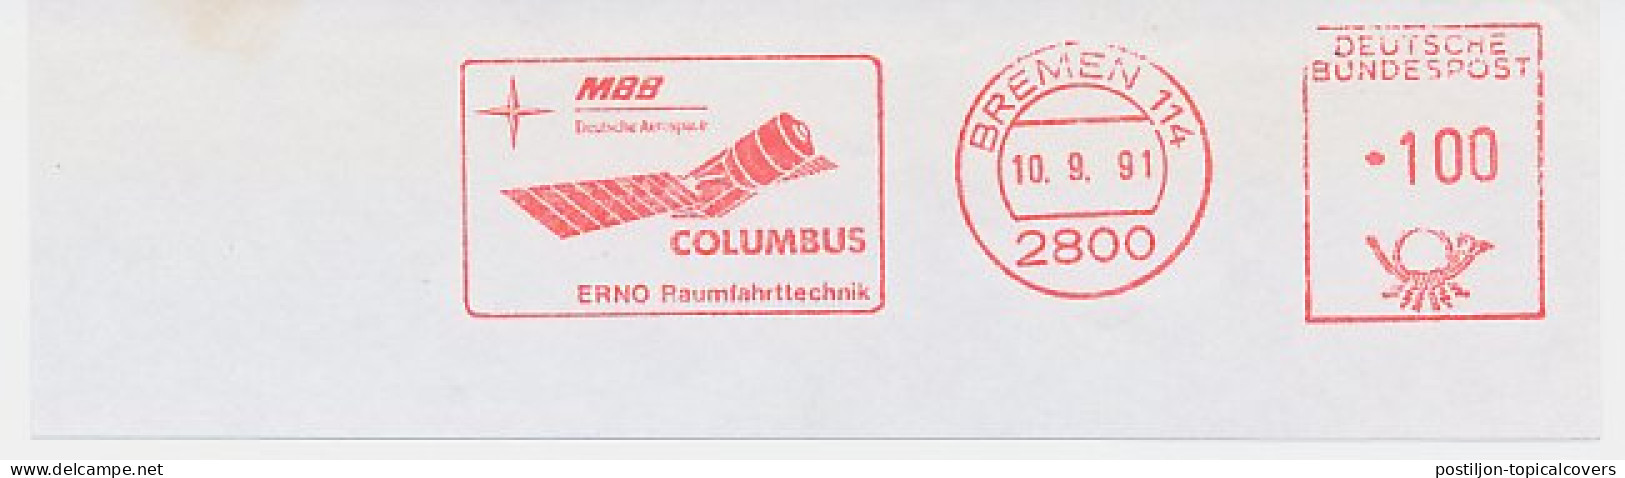 Meter Cut Germany 1991 Satellite Columbus - MBB - ERNO - Sterrenkunde